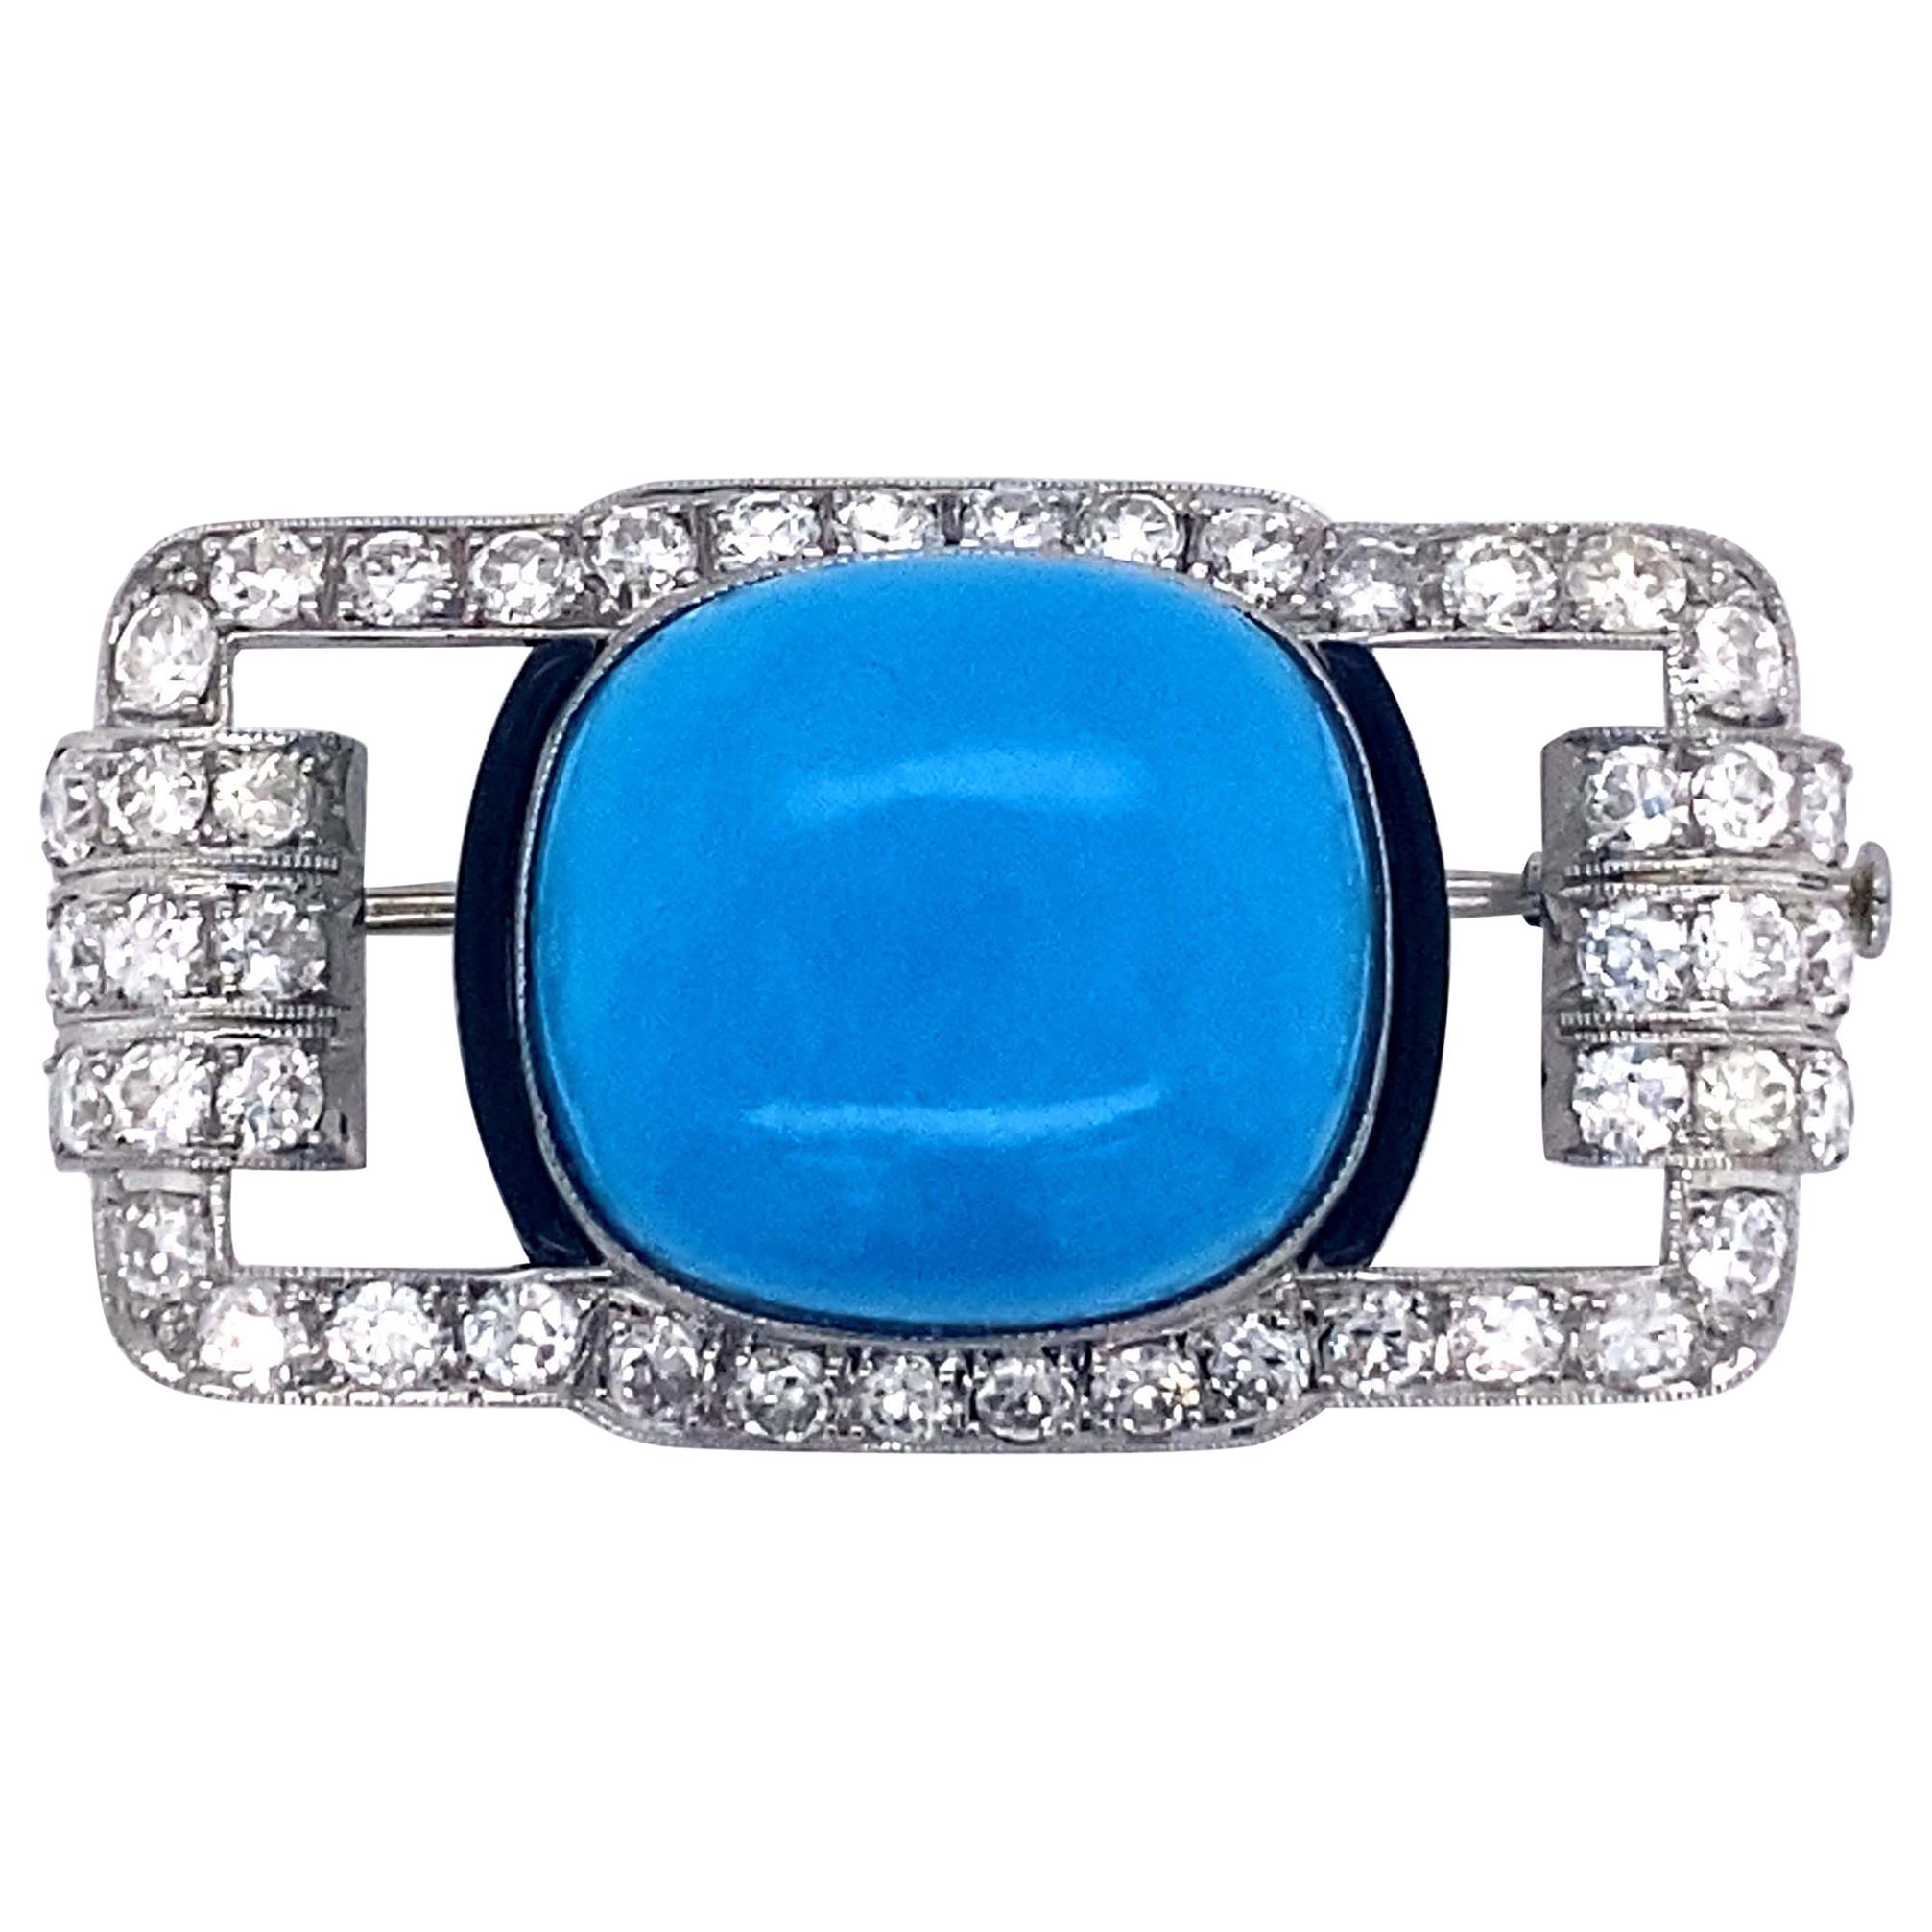 Art Deco Platinum Diamond and Turquoise Brooch